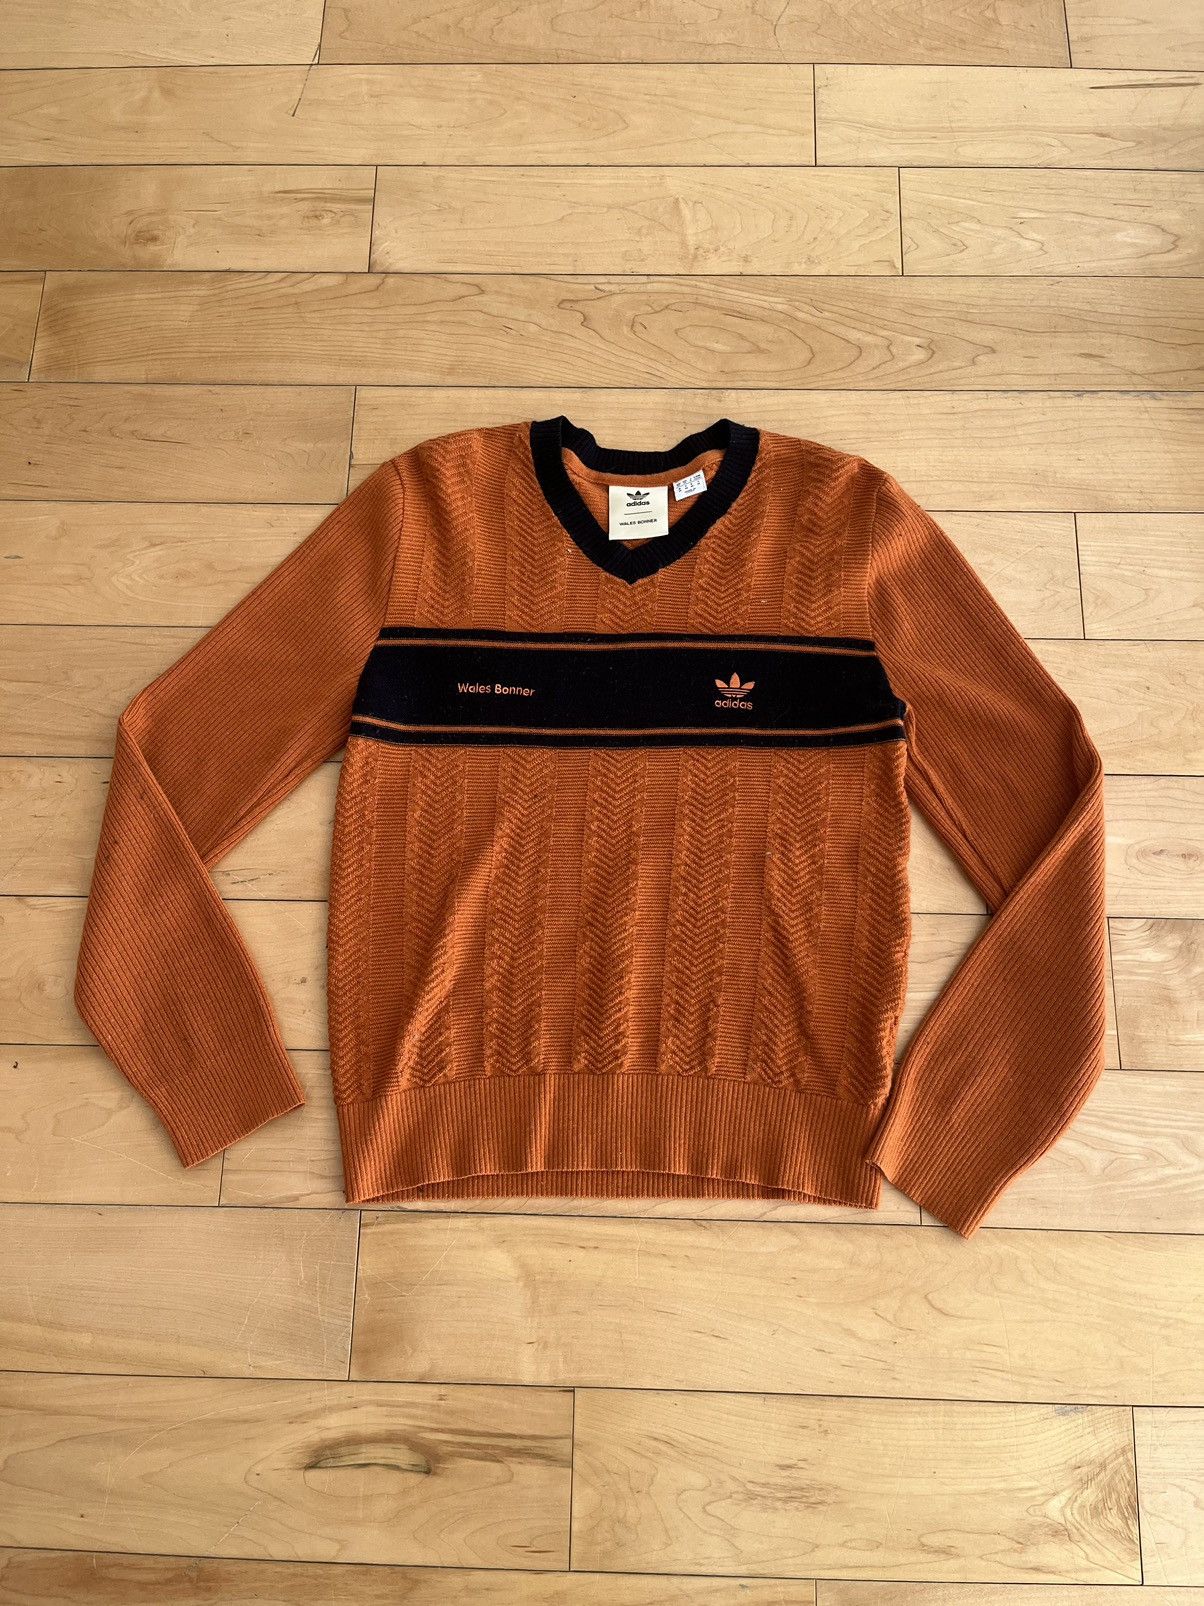 Wales Bonner x Adidas Knit Sweater - 1